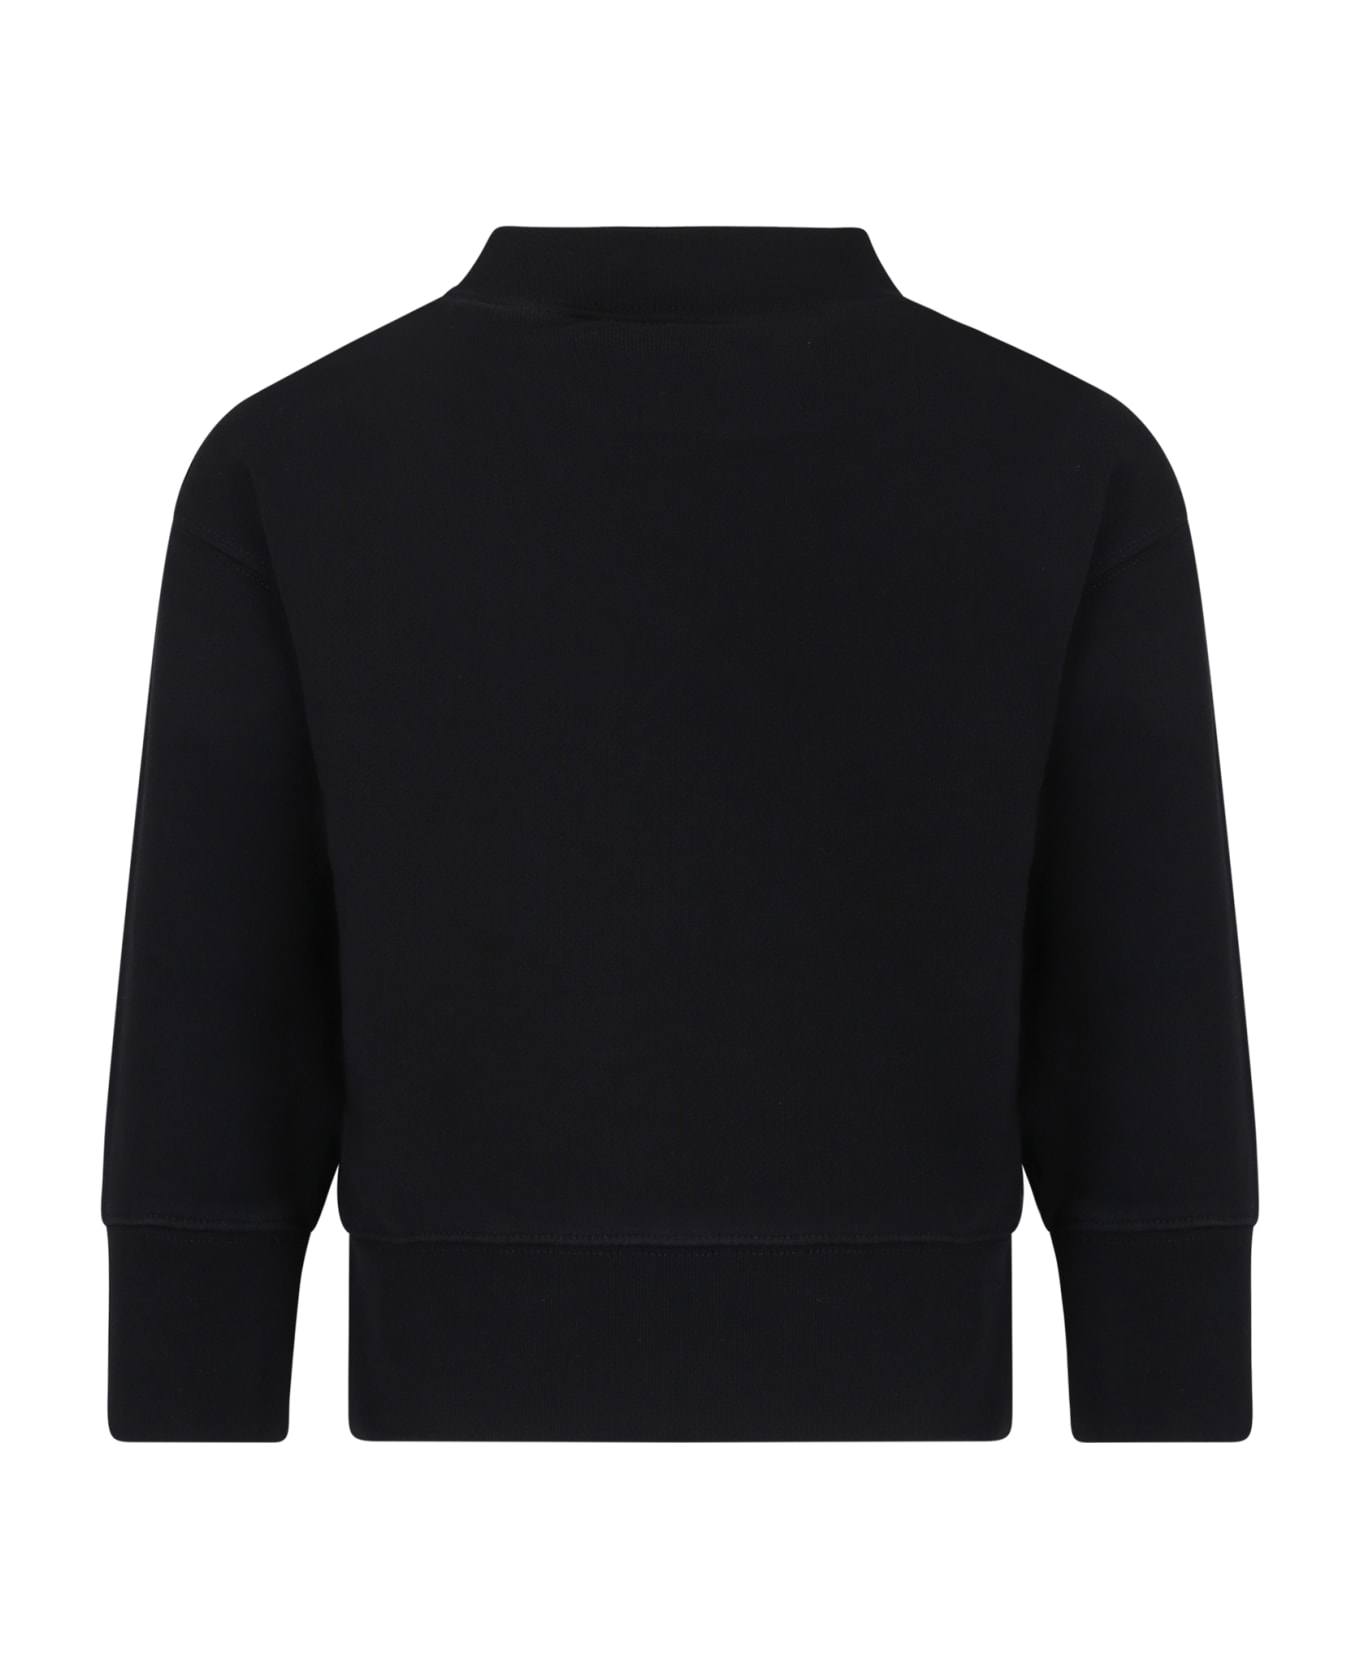 Palm Angels Black Swaetshirt For Boy With Palm Tree - Black ニットウェア＆スウェットシャツ